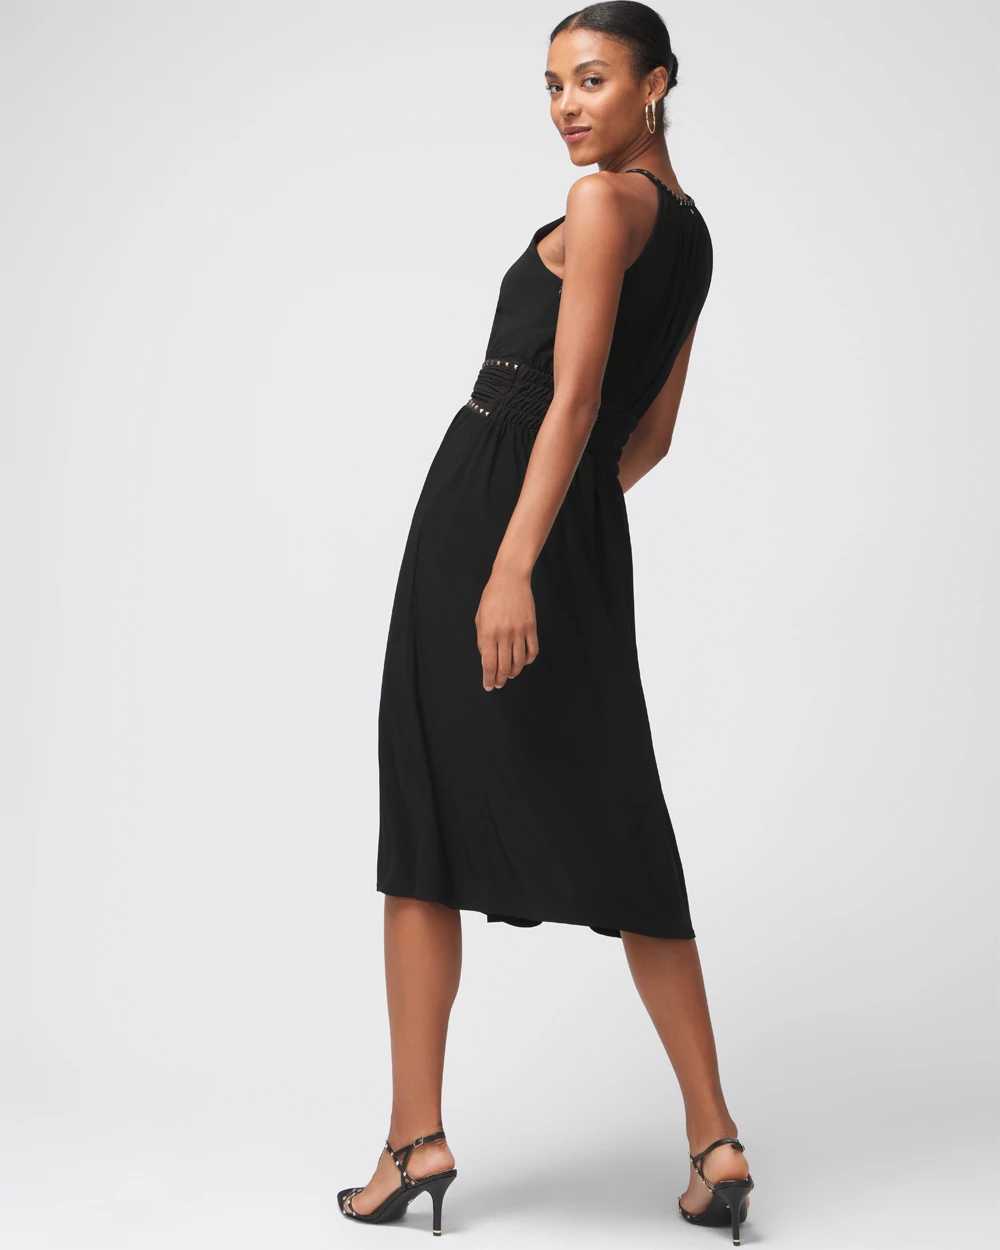 Petite Sleeveless Matte Jersey Studded Midi Dress click to view larger image.